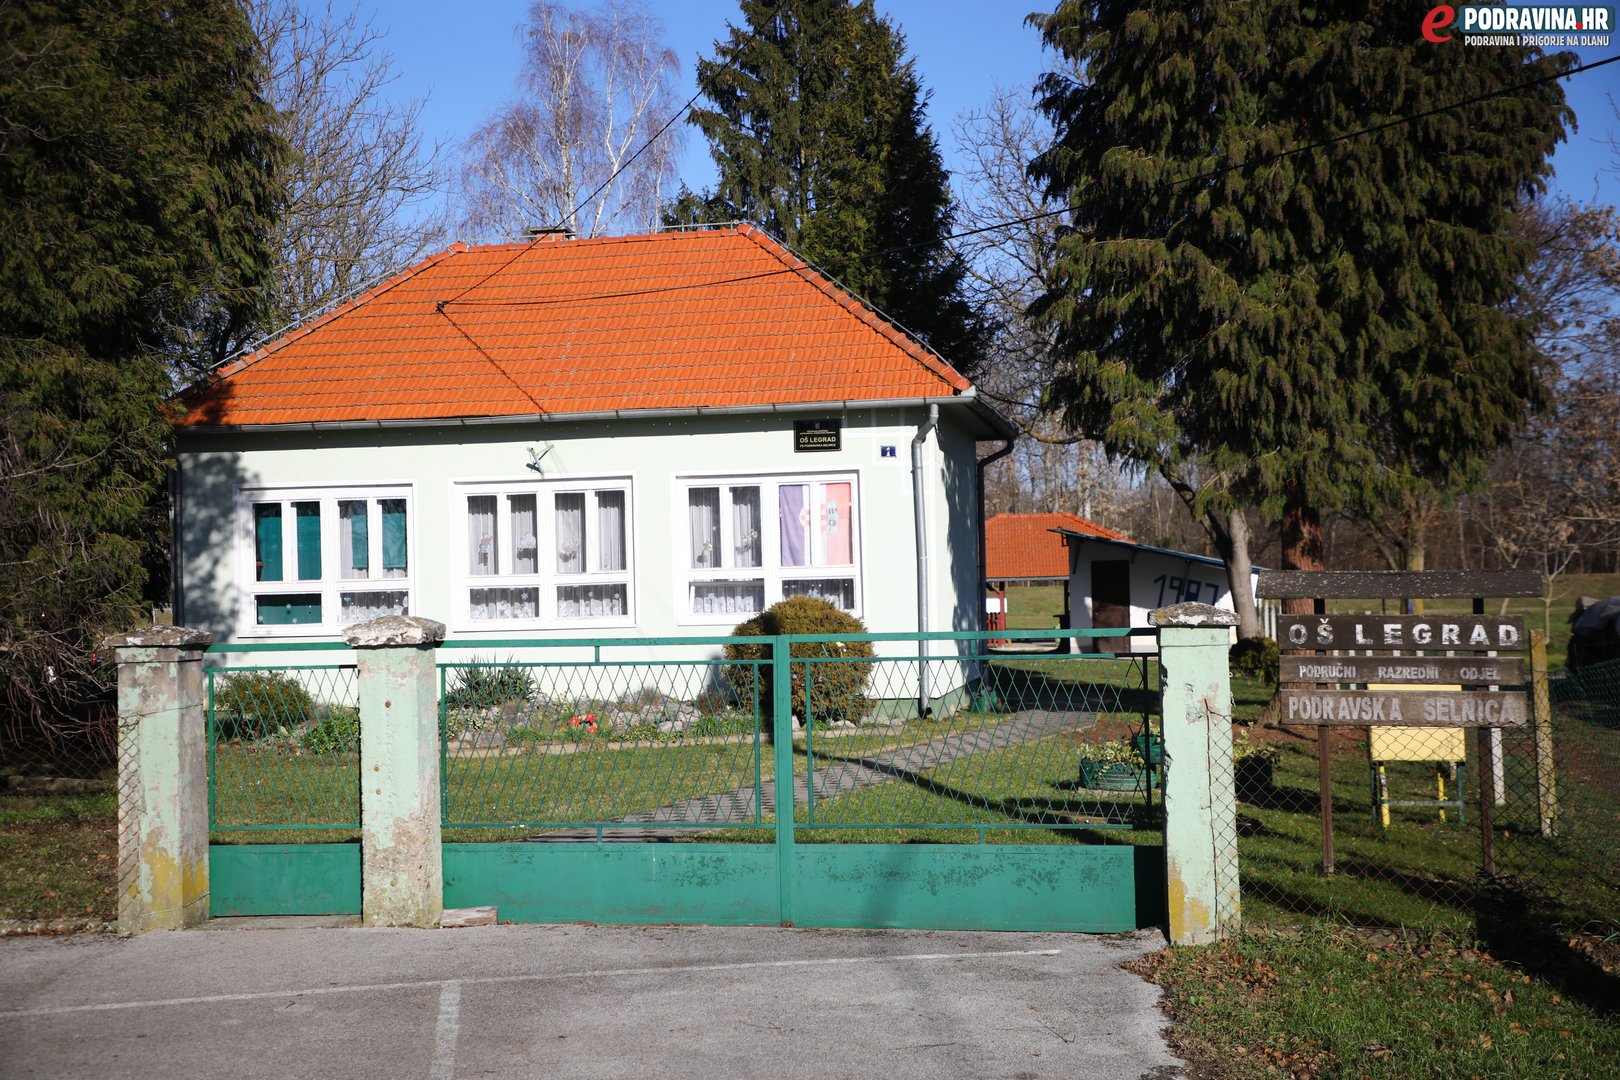 Osnovna škola Podravka Selnica